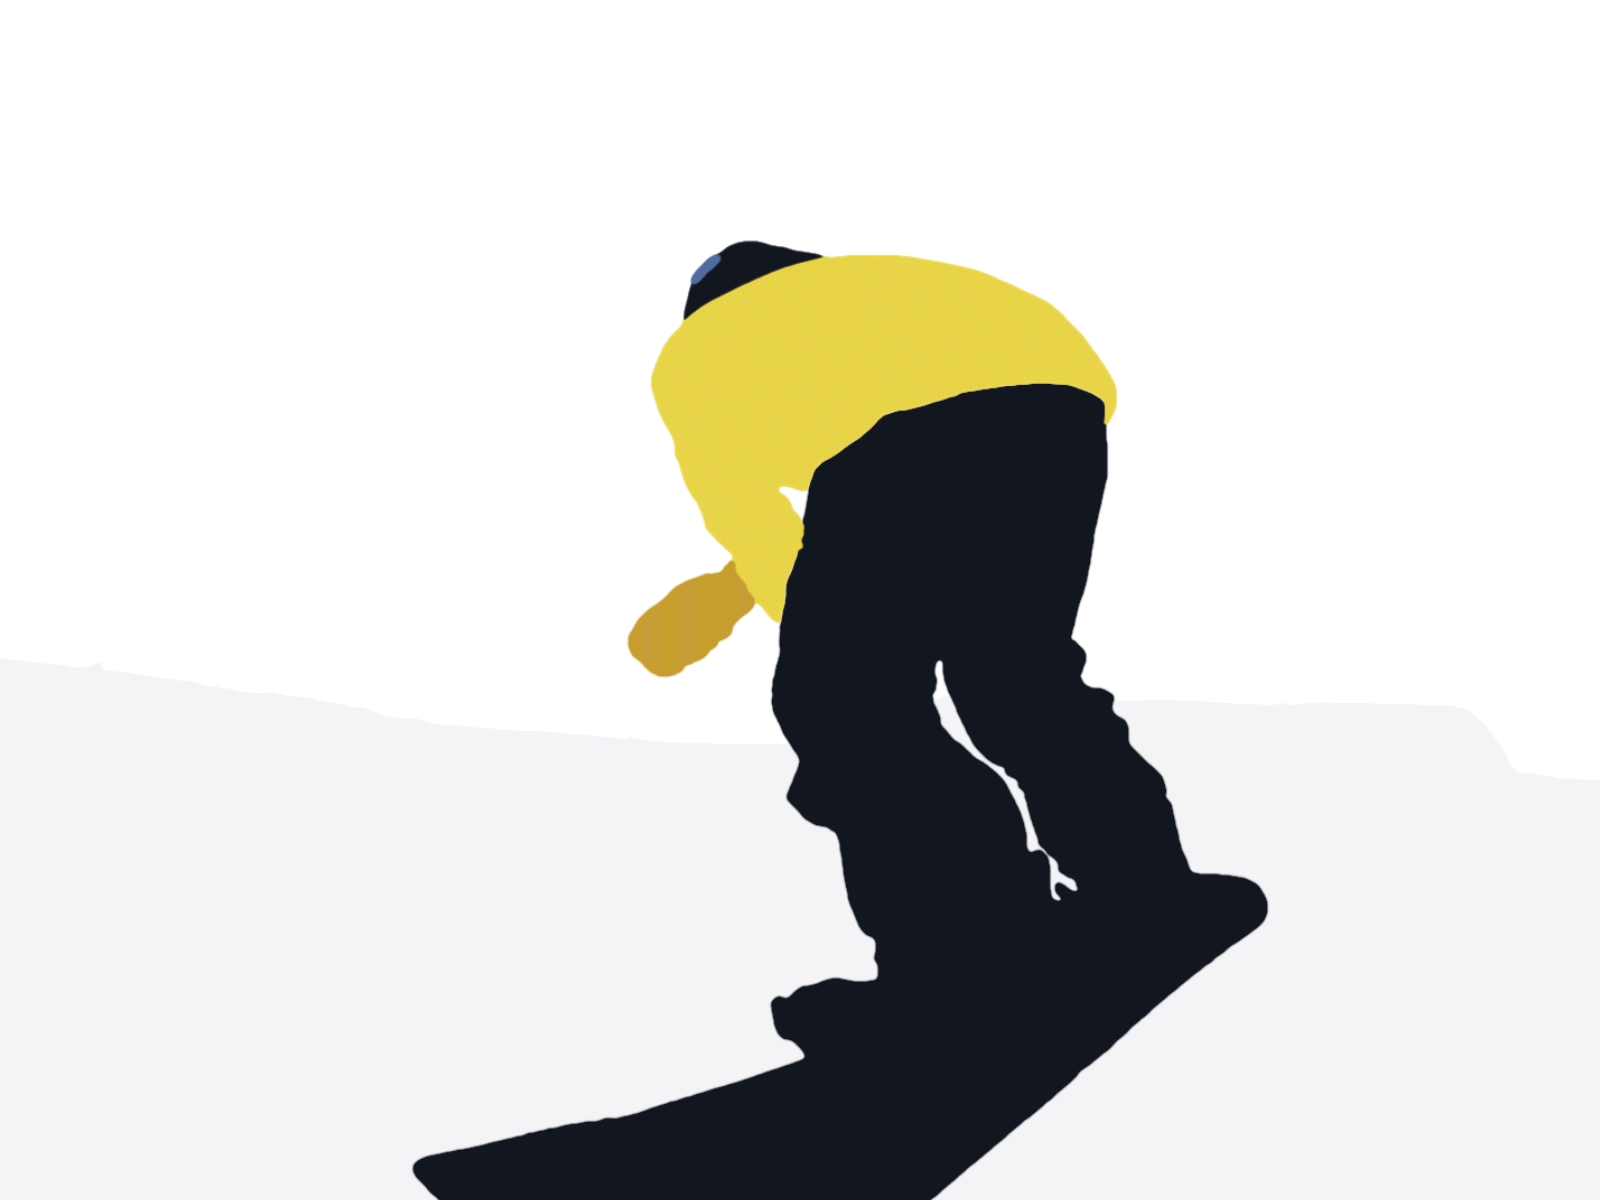 Snowboarding ride